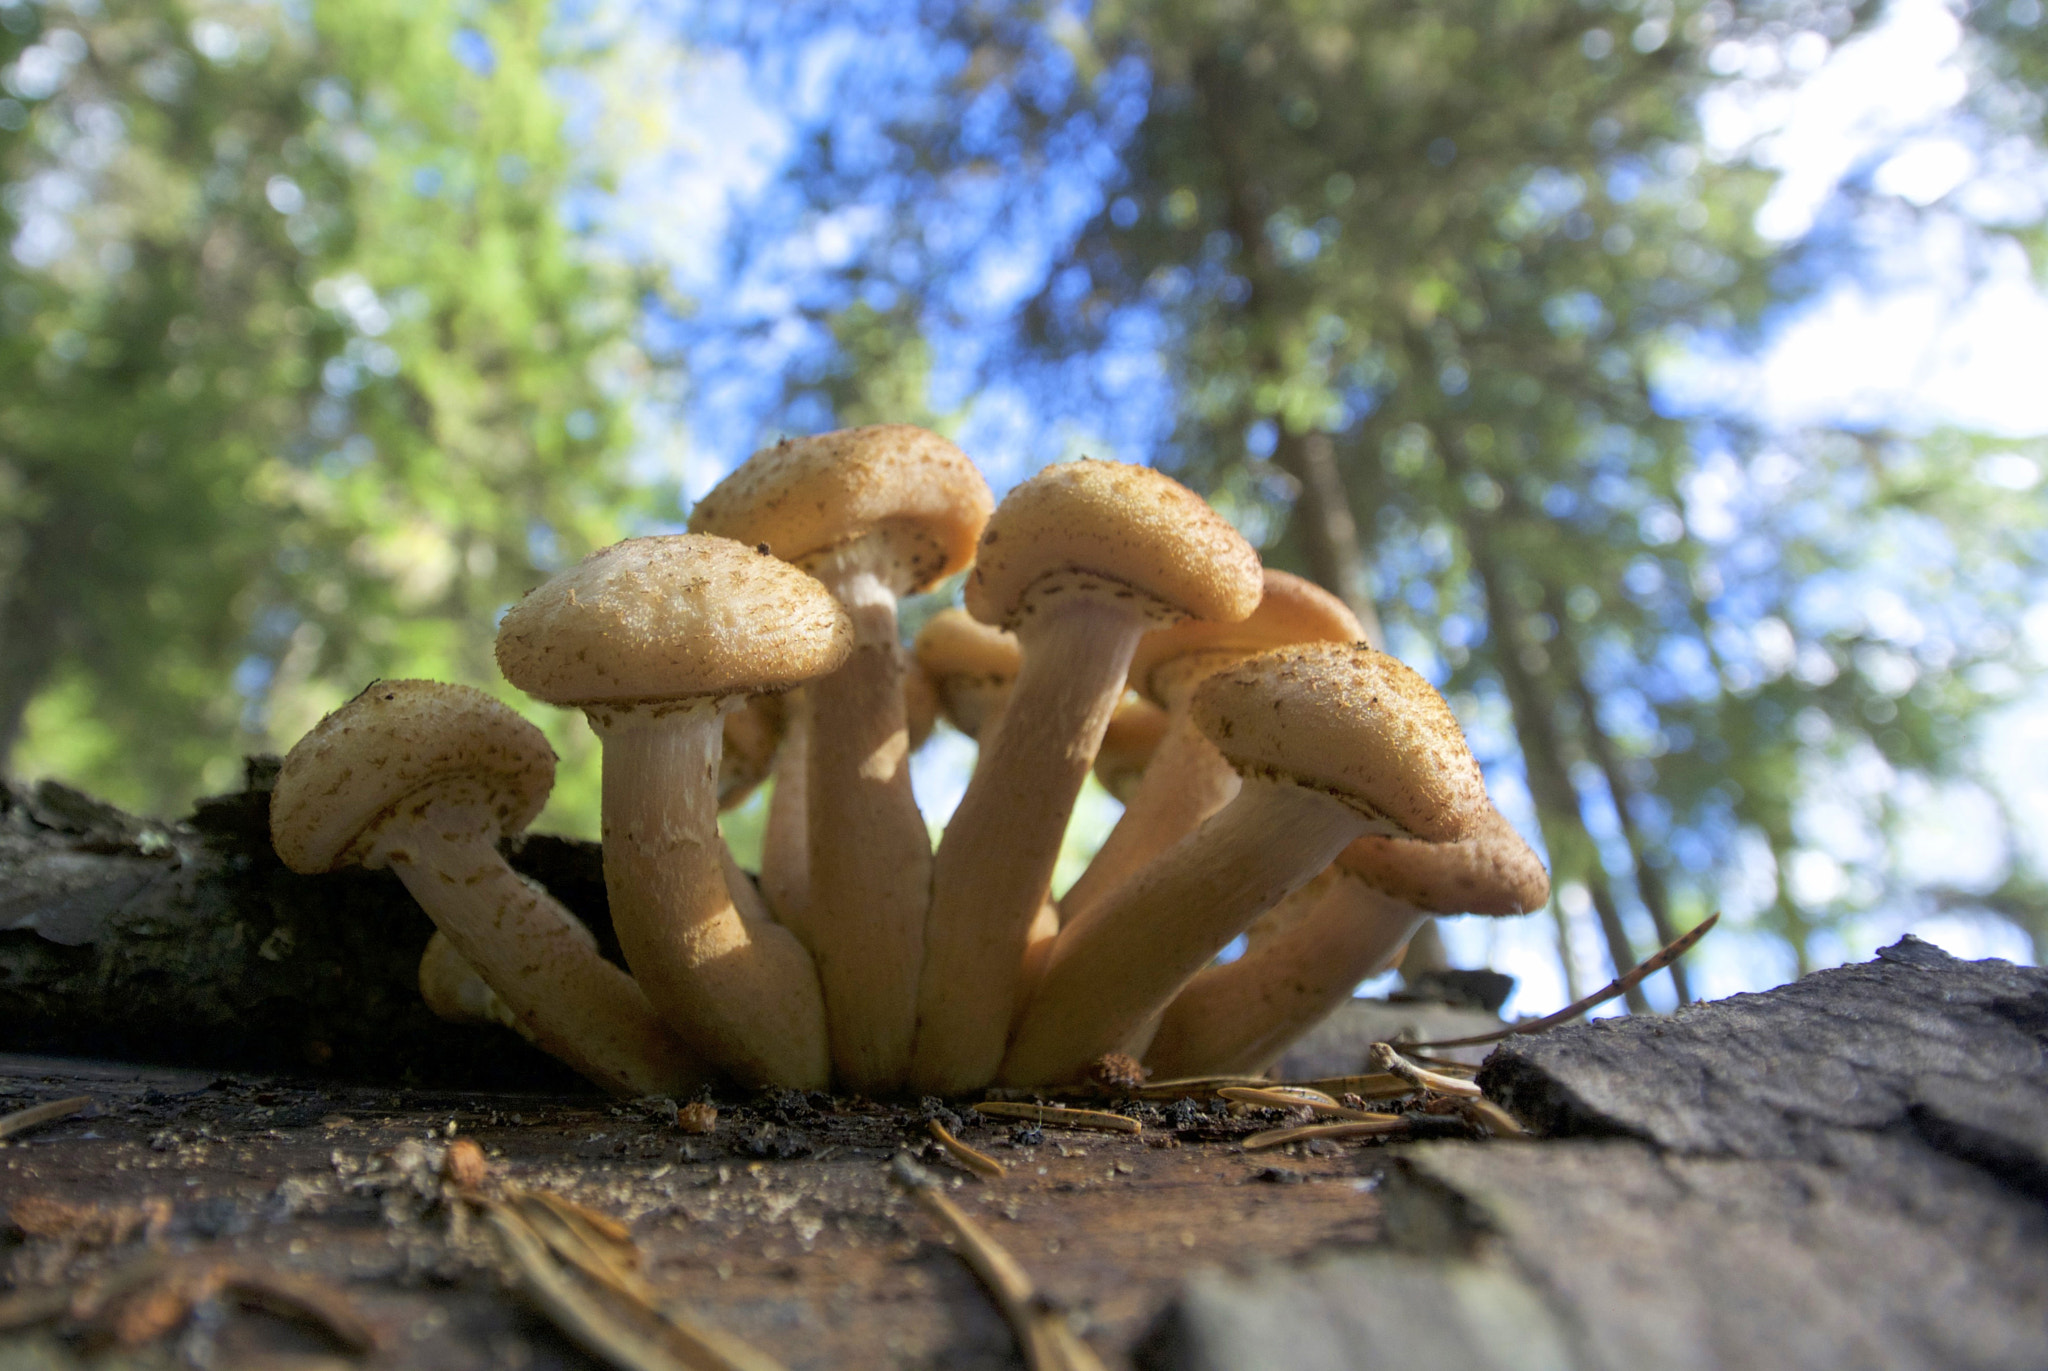 Nikon 1 J2 sample photo. A group of mushrooms on a tree bark photography